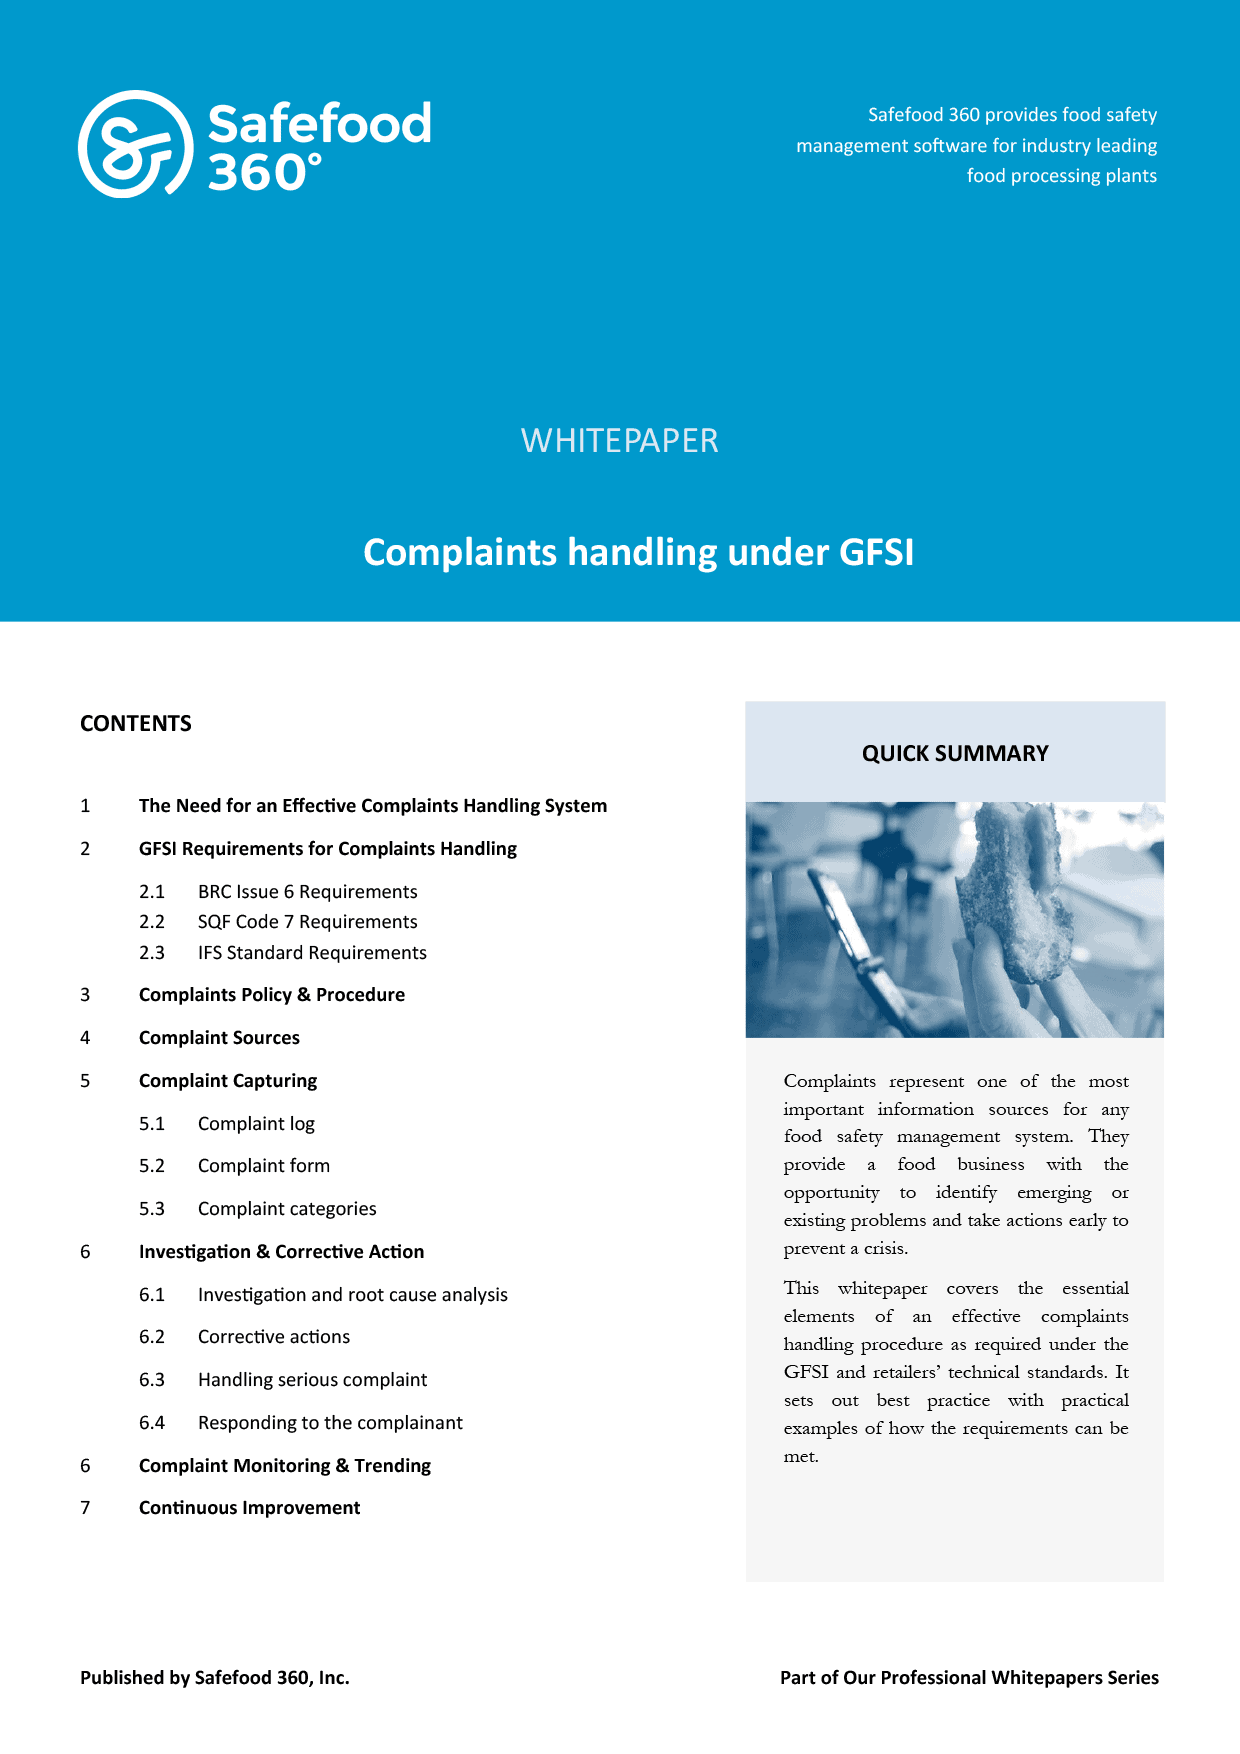 Complaints Handling Under GFSI Whitepaper Cover